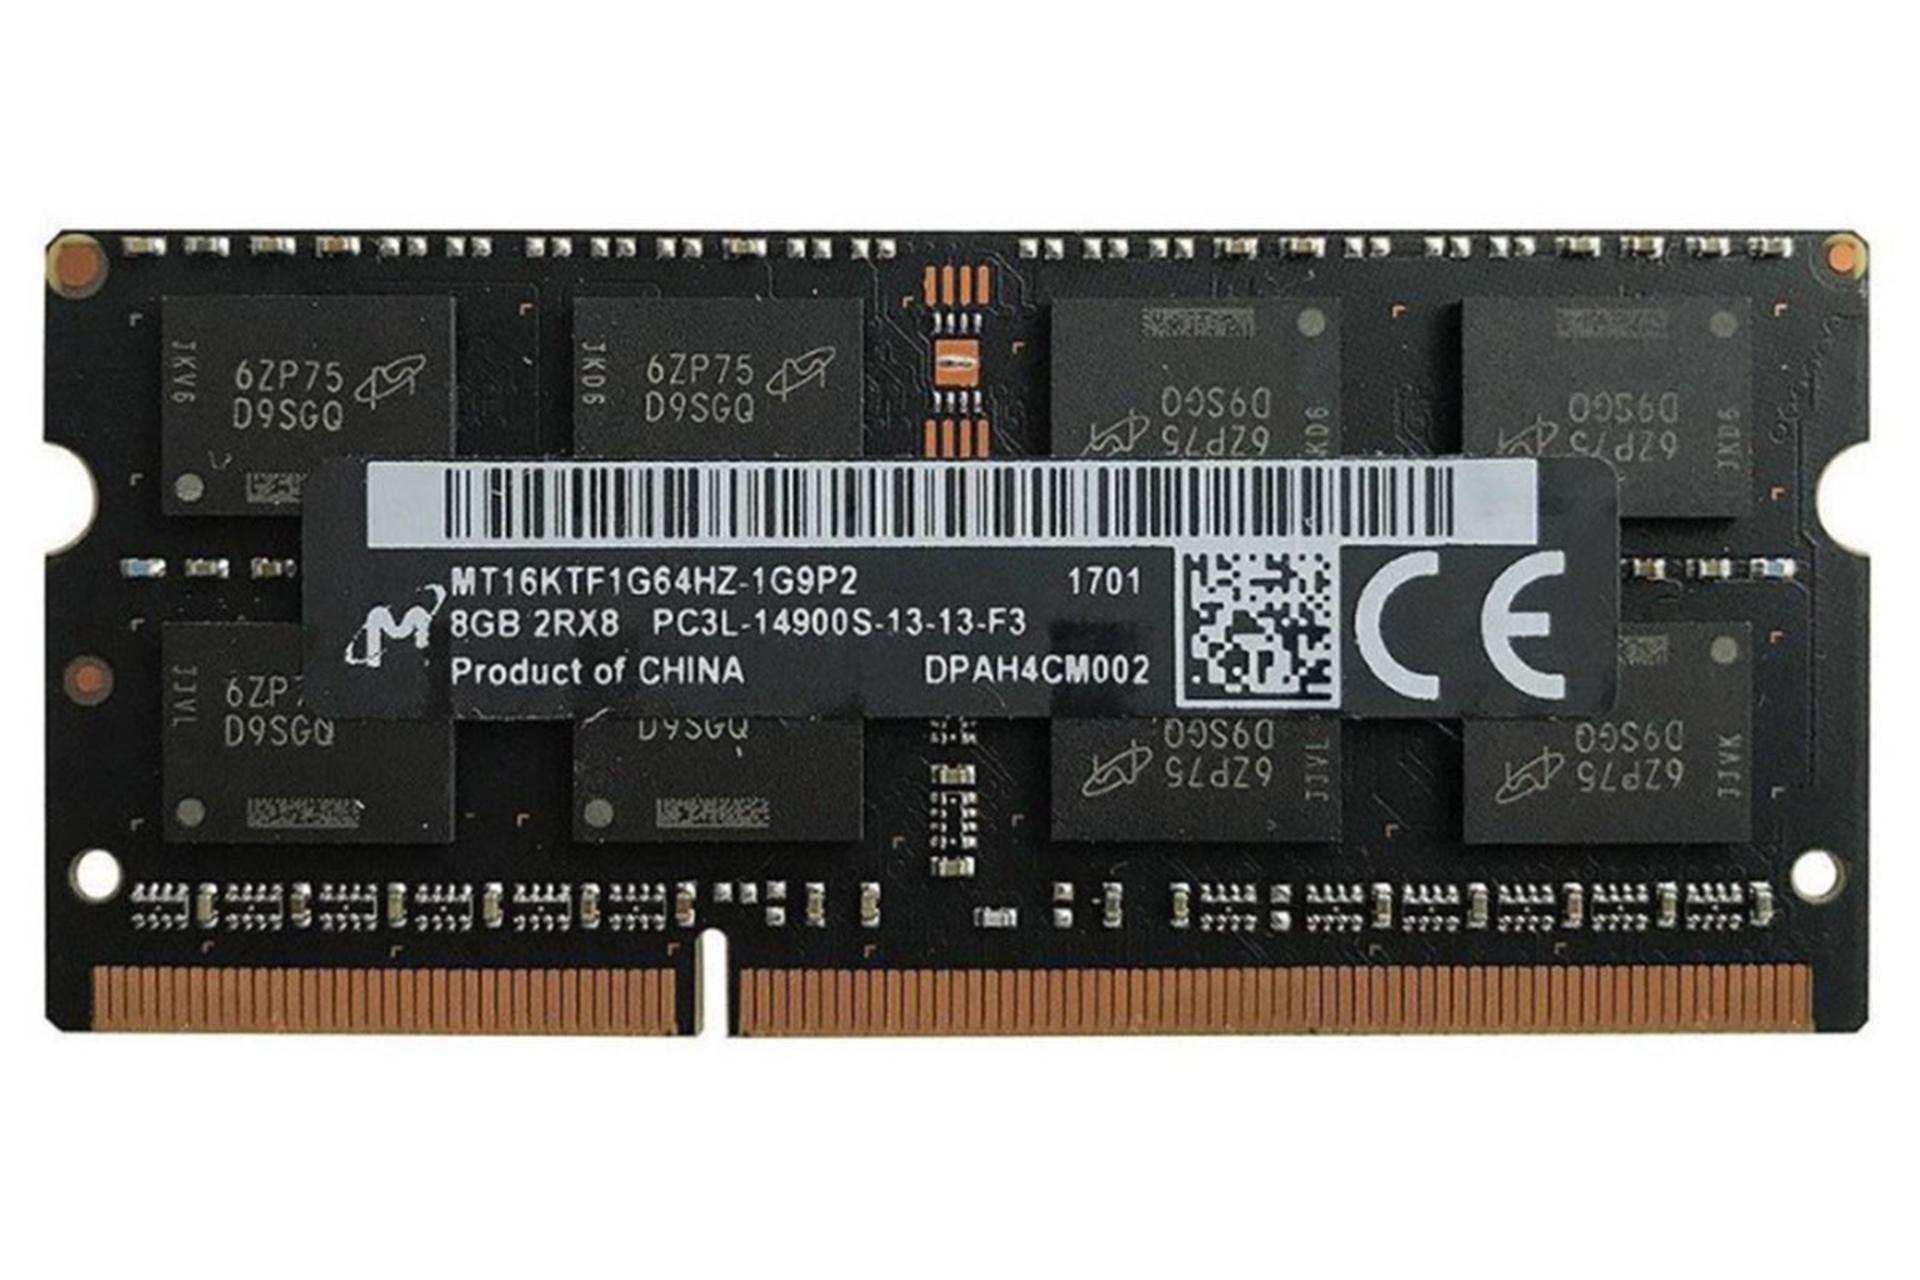 Micron MT16KTF1G64HZ-1G9P2 ظرفیت 16 گیگابایت (2x8) از نوع DDR3L-1866 